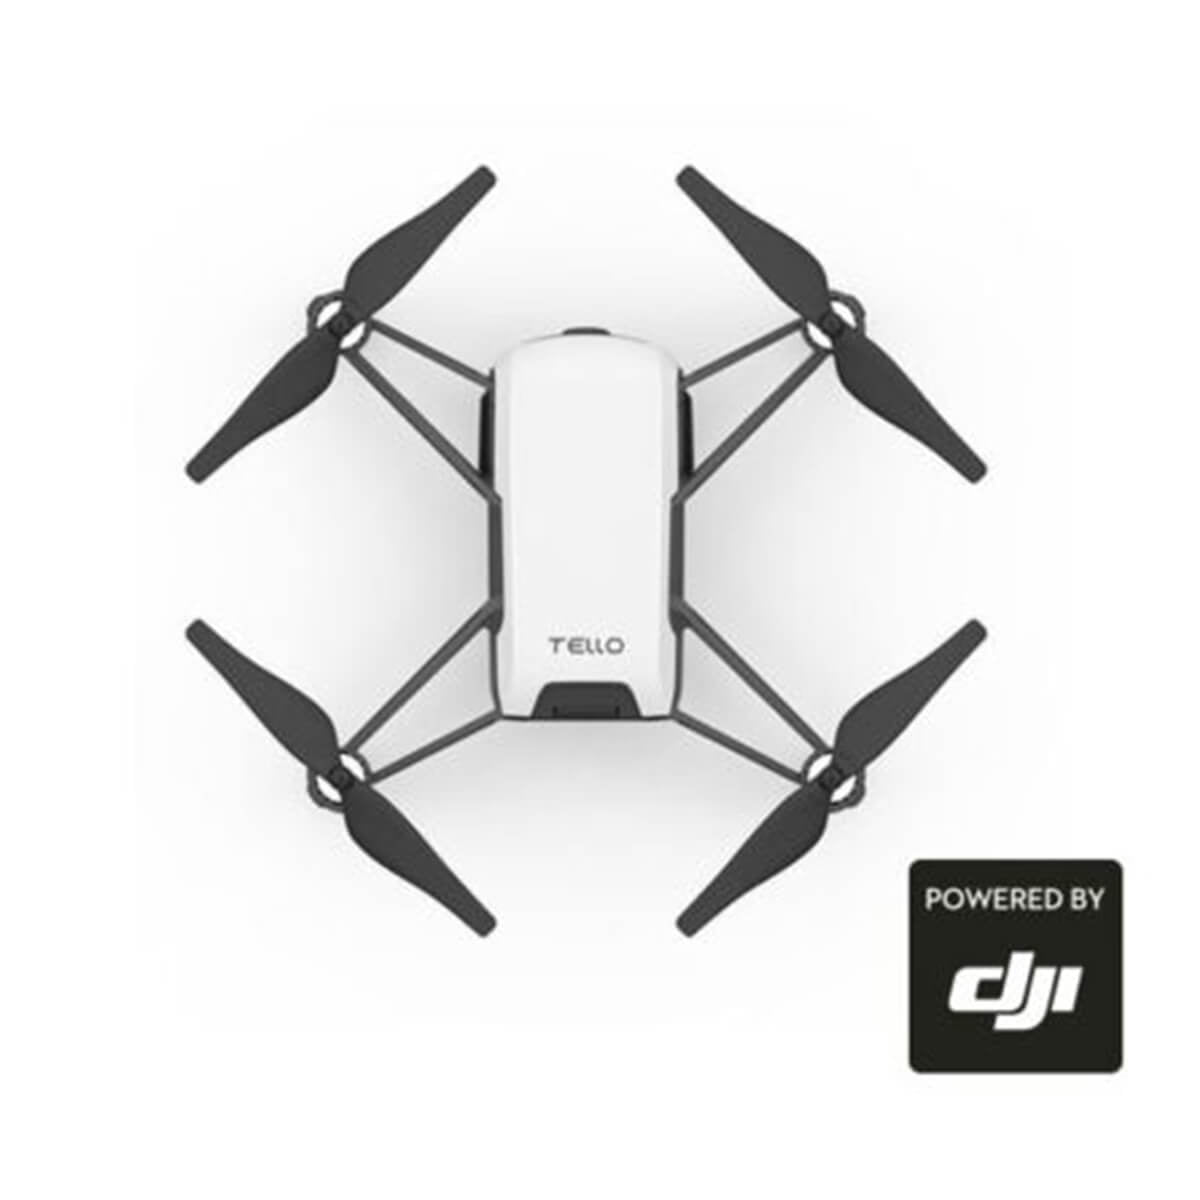 Tello Drone Powered by DJI